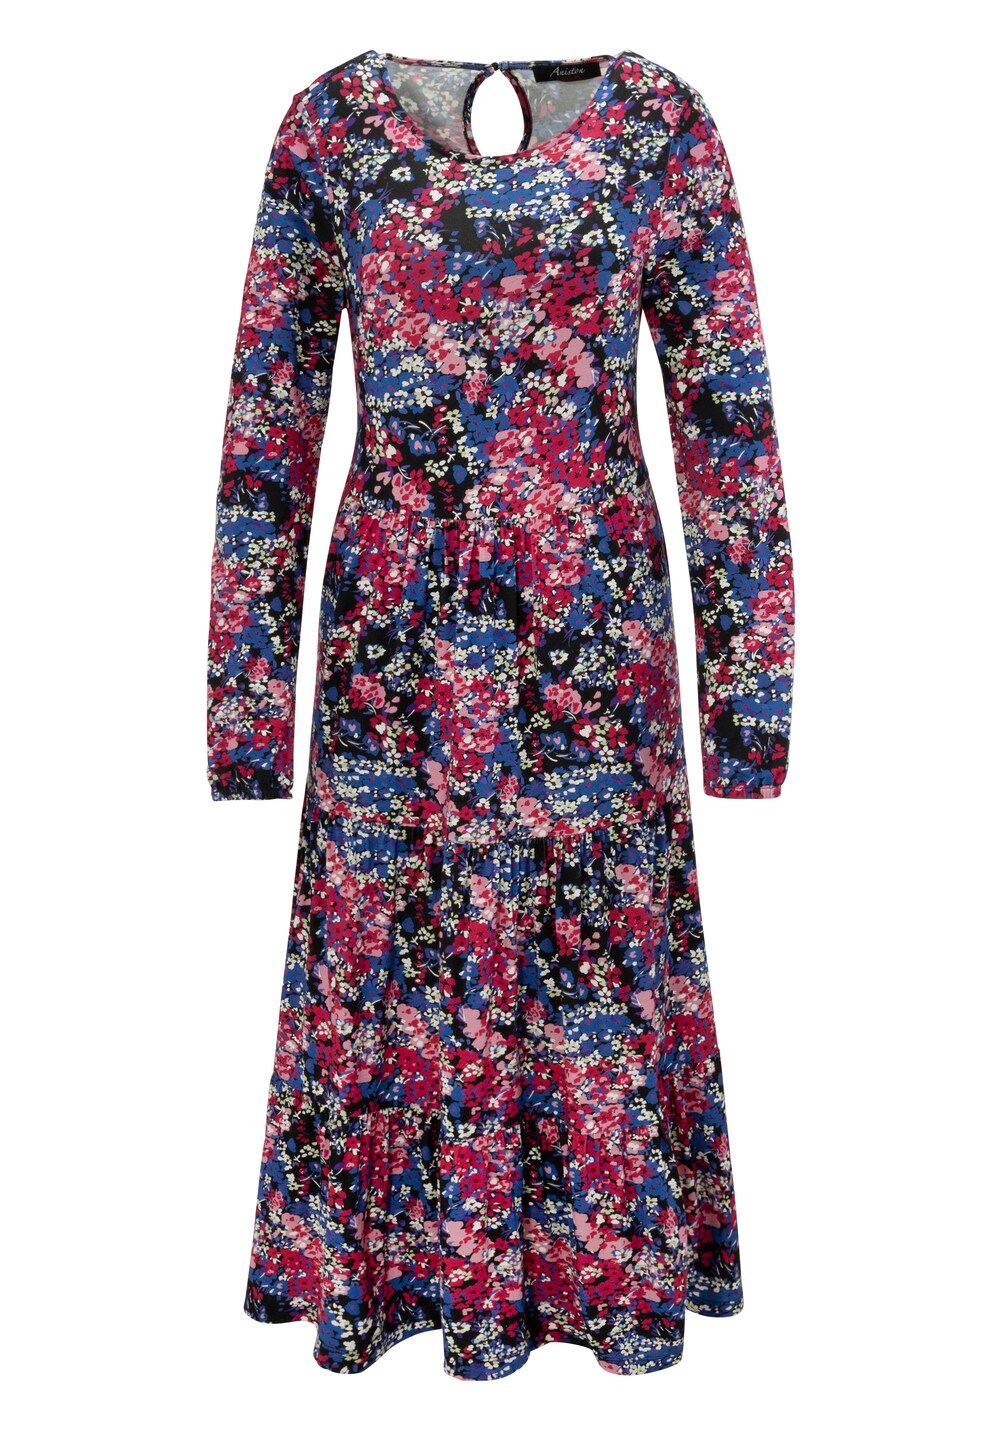 Платье Aniston Casual, смешанные цвета